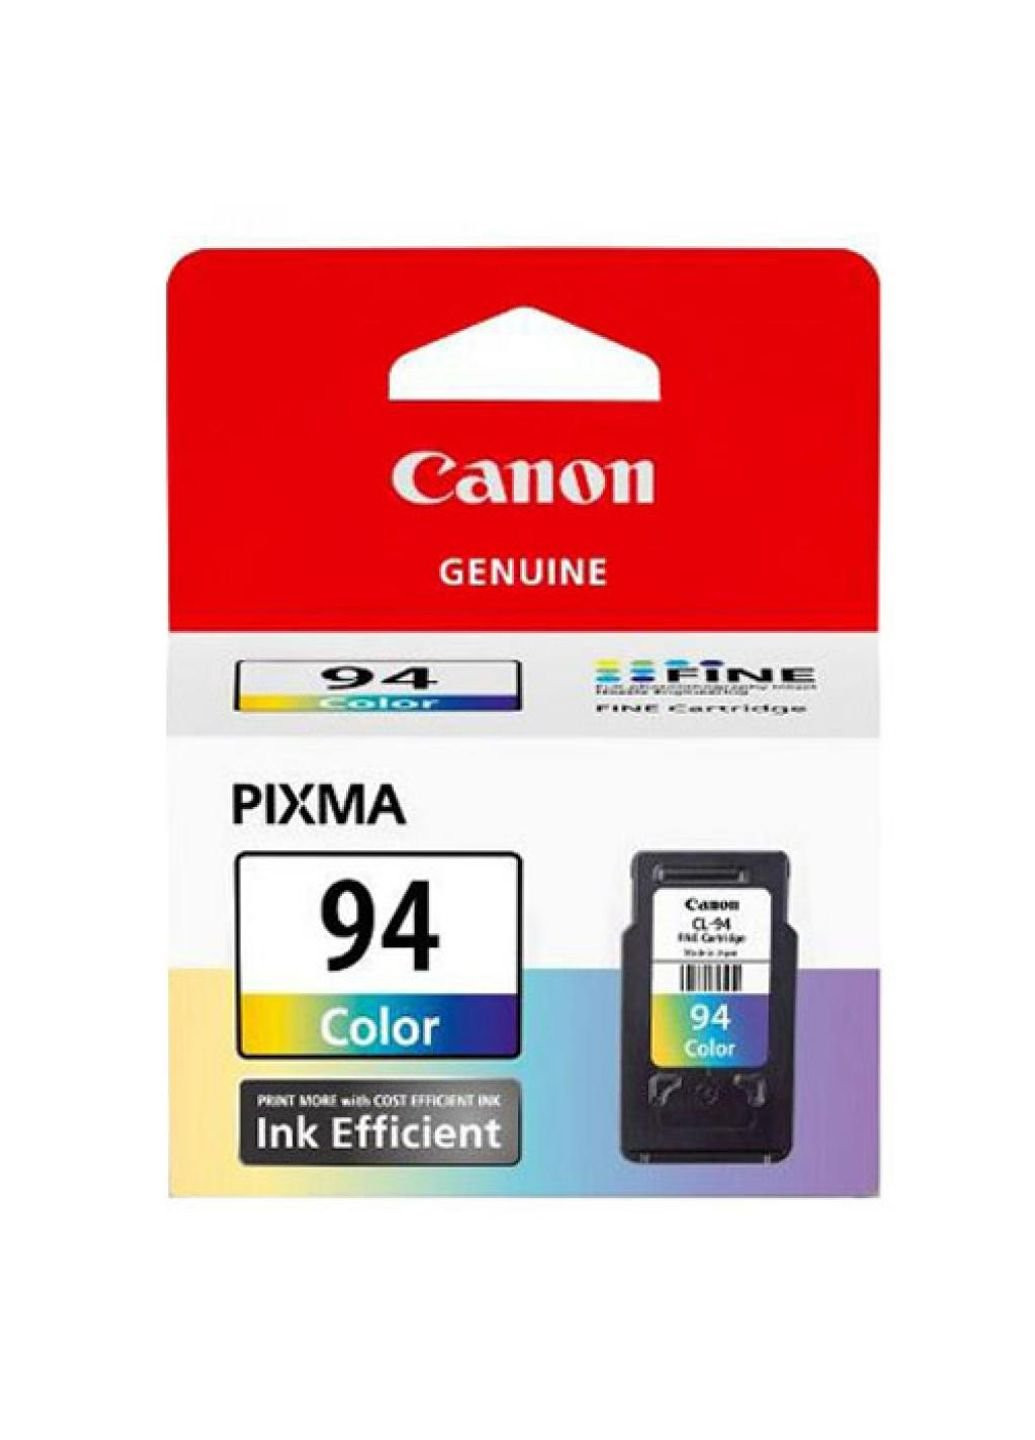 Картридж (8593B001) Canon cl-94 color для pixma ink efficiency e514 (247614449)